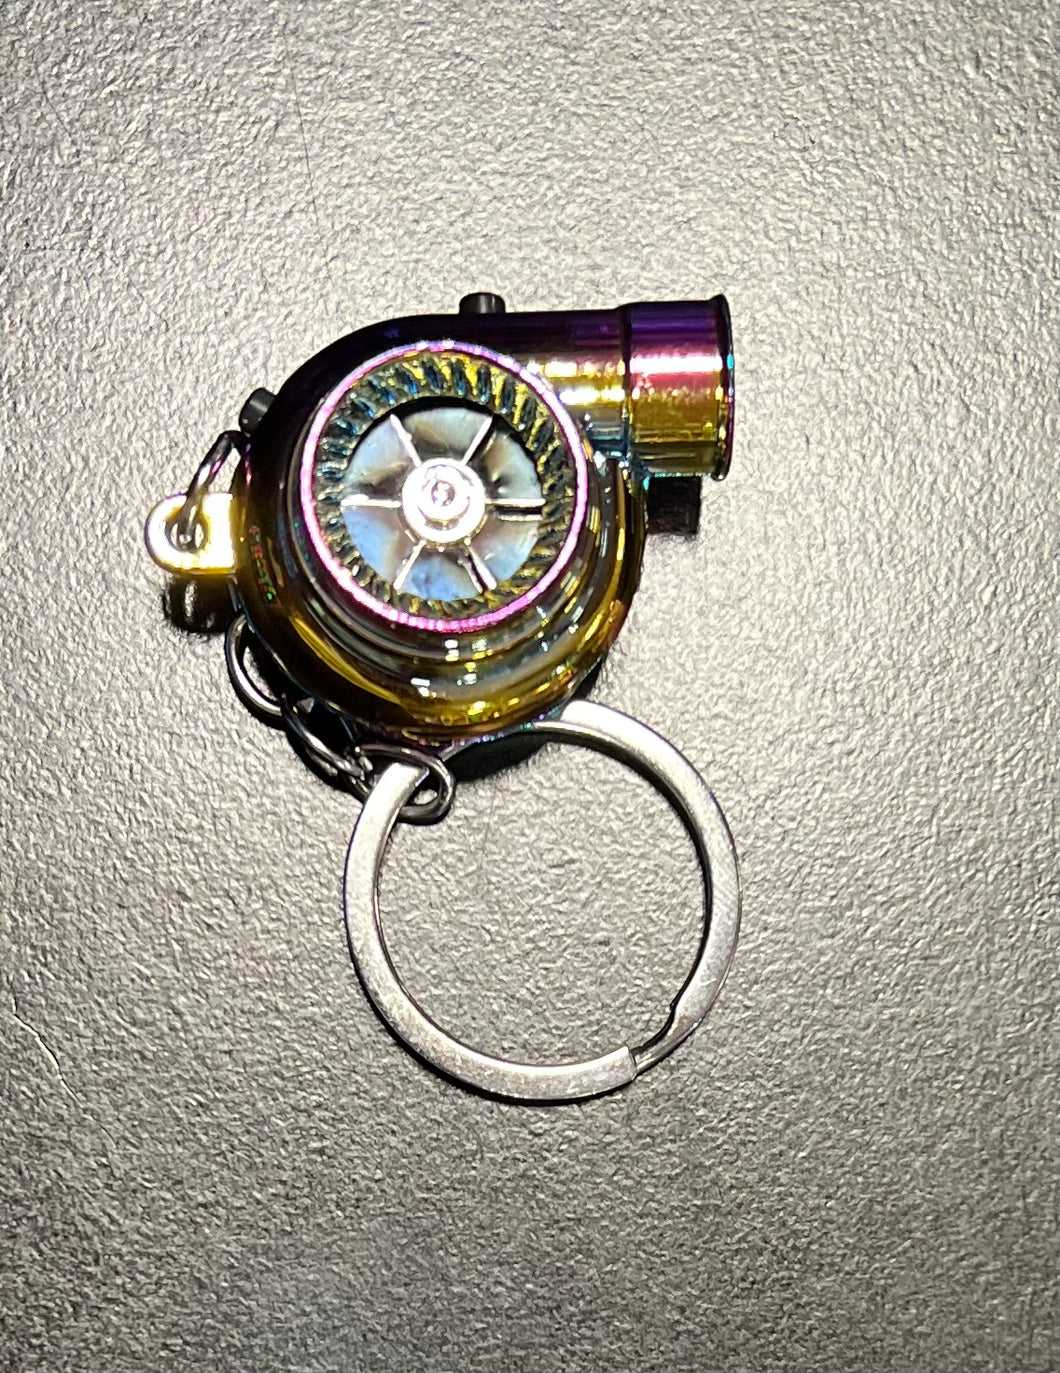 Oil slick rainbow rechargeable turbo keychain